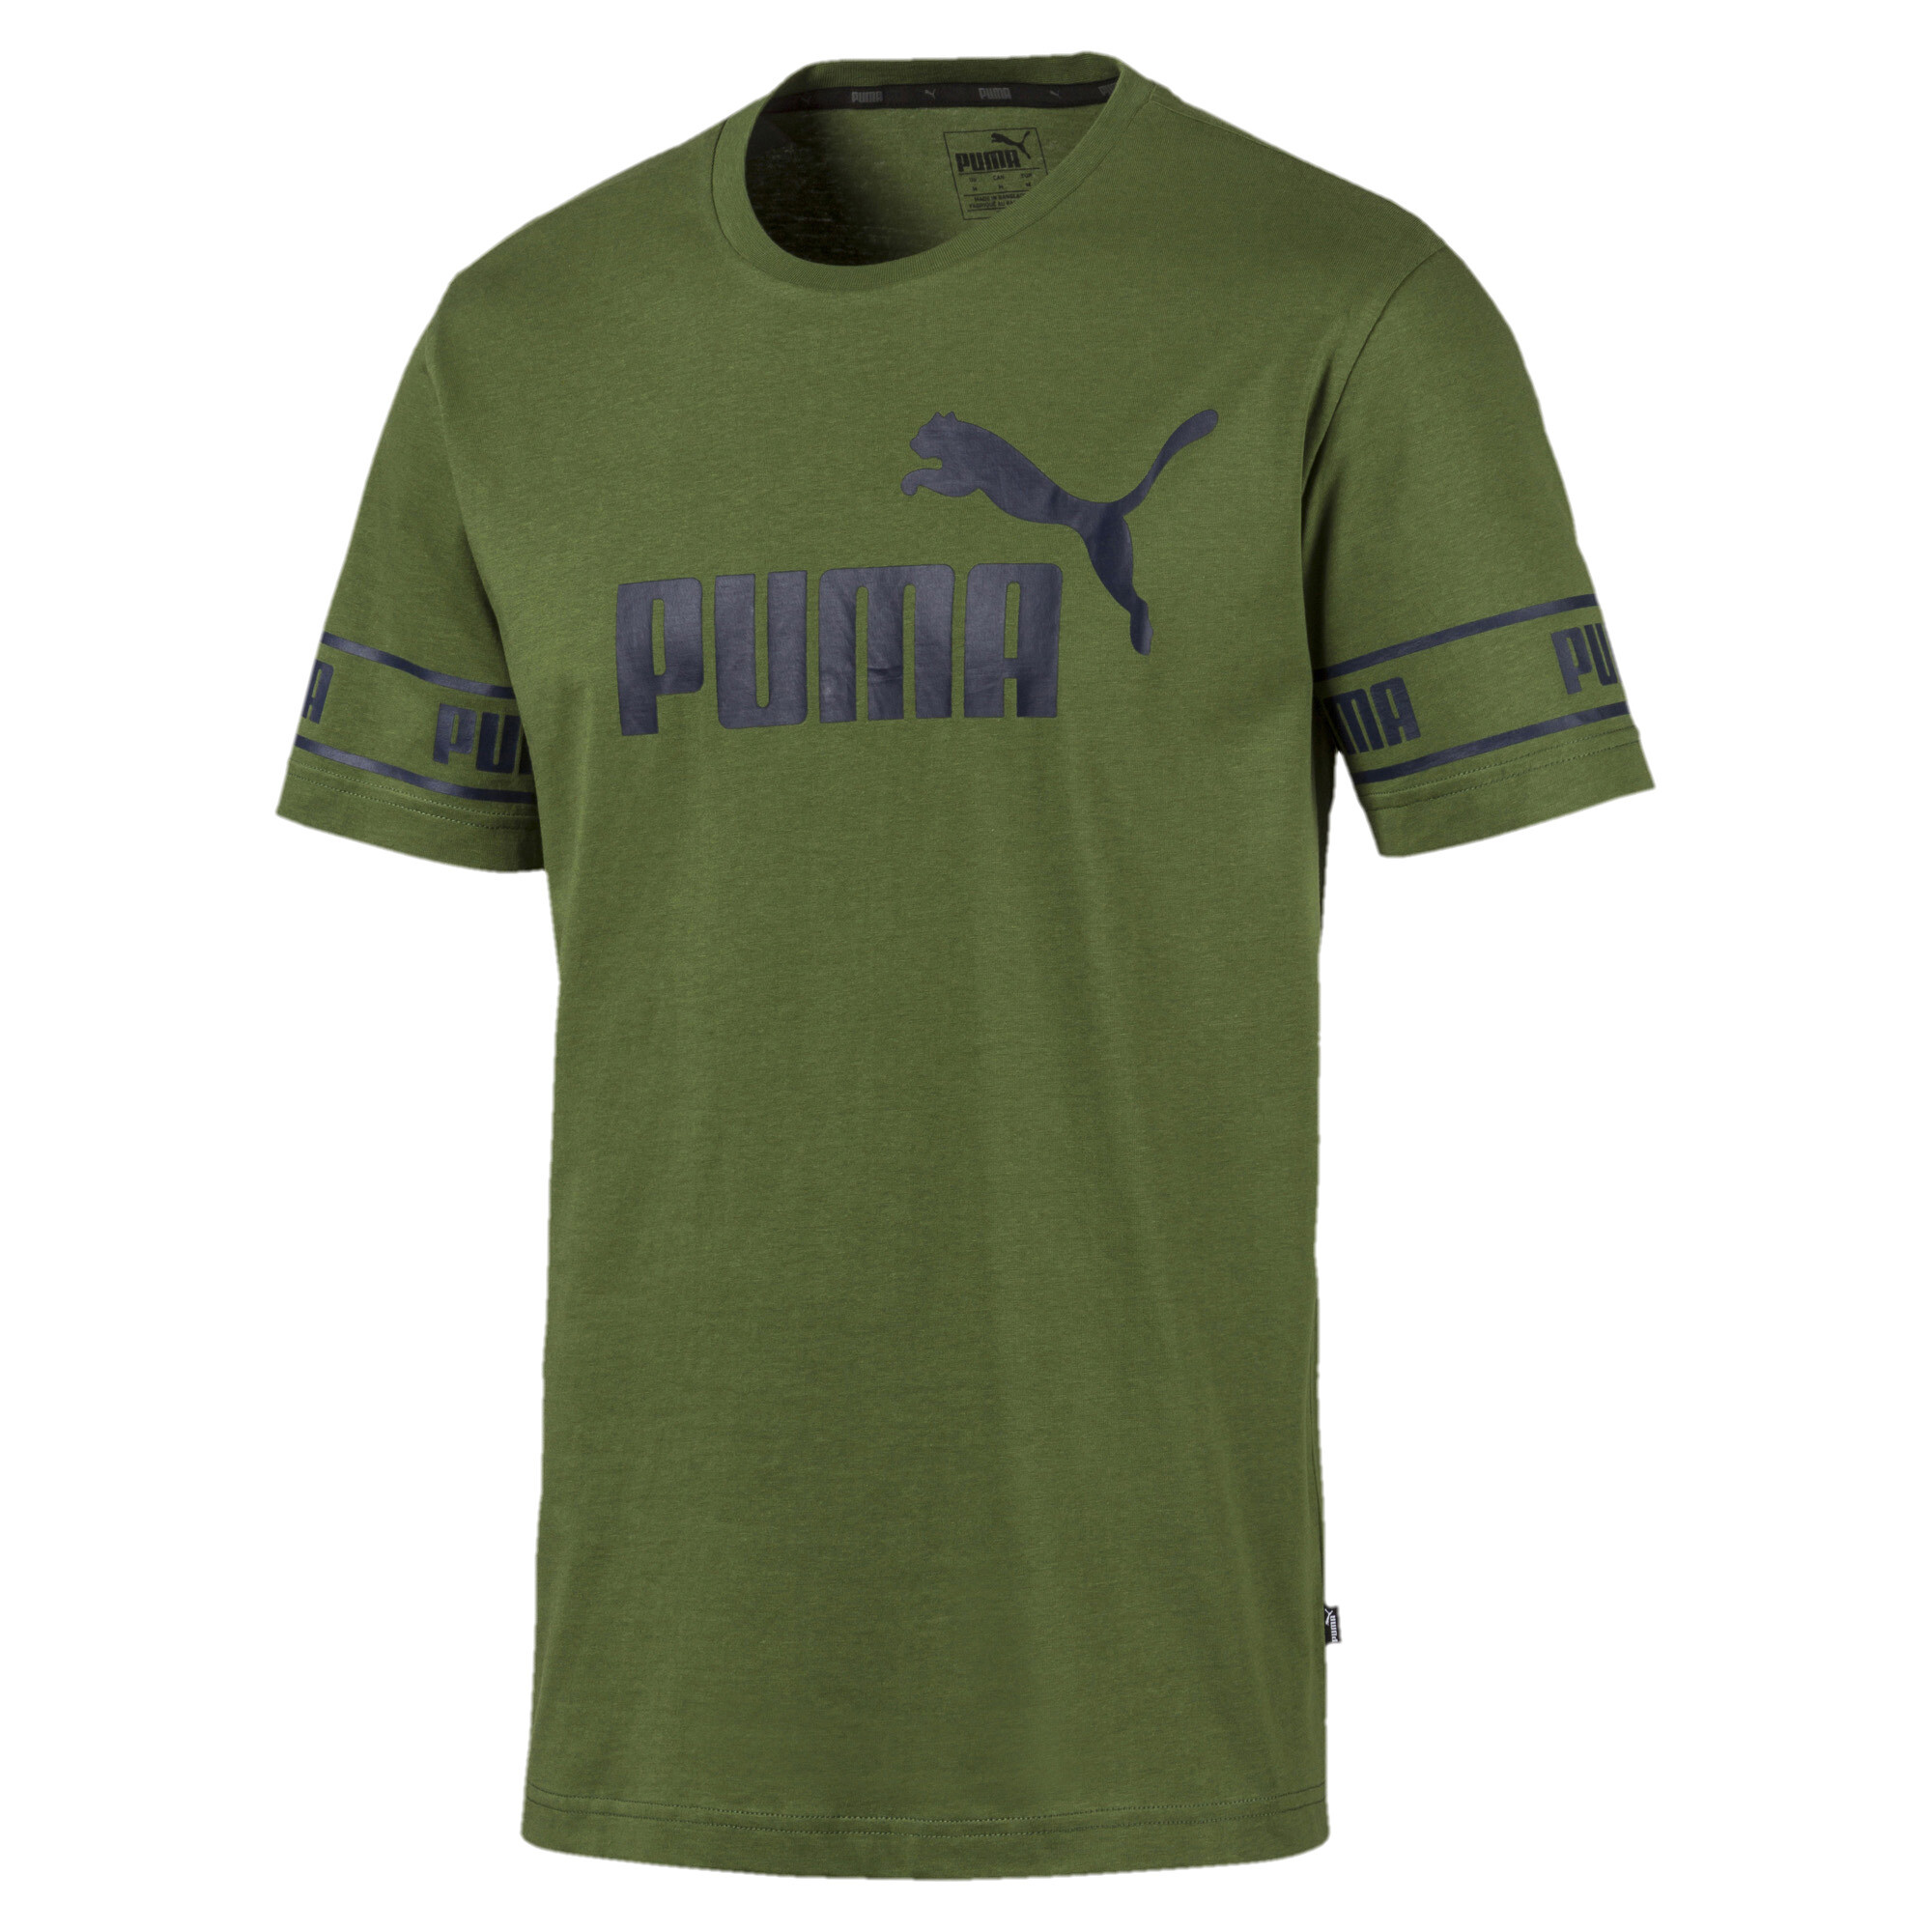 Men's Puma Amplified's T-Shirt, Green, Size L, Clothing